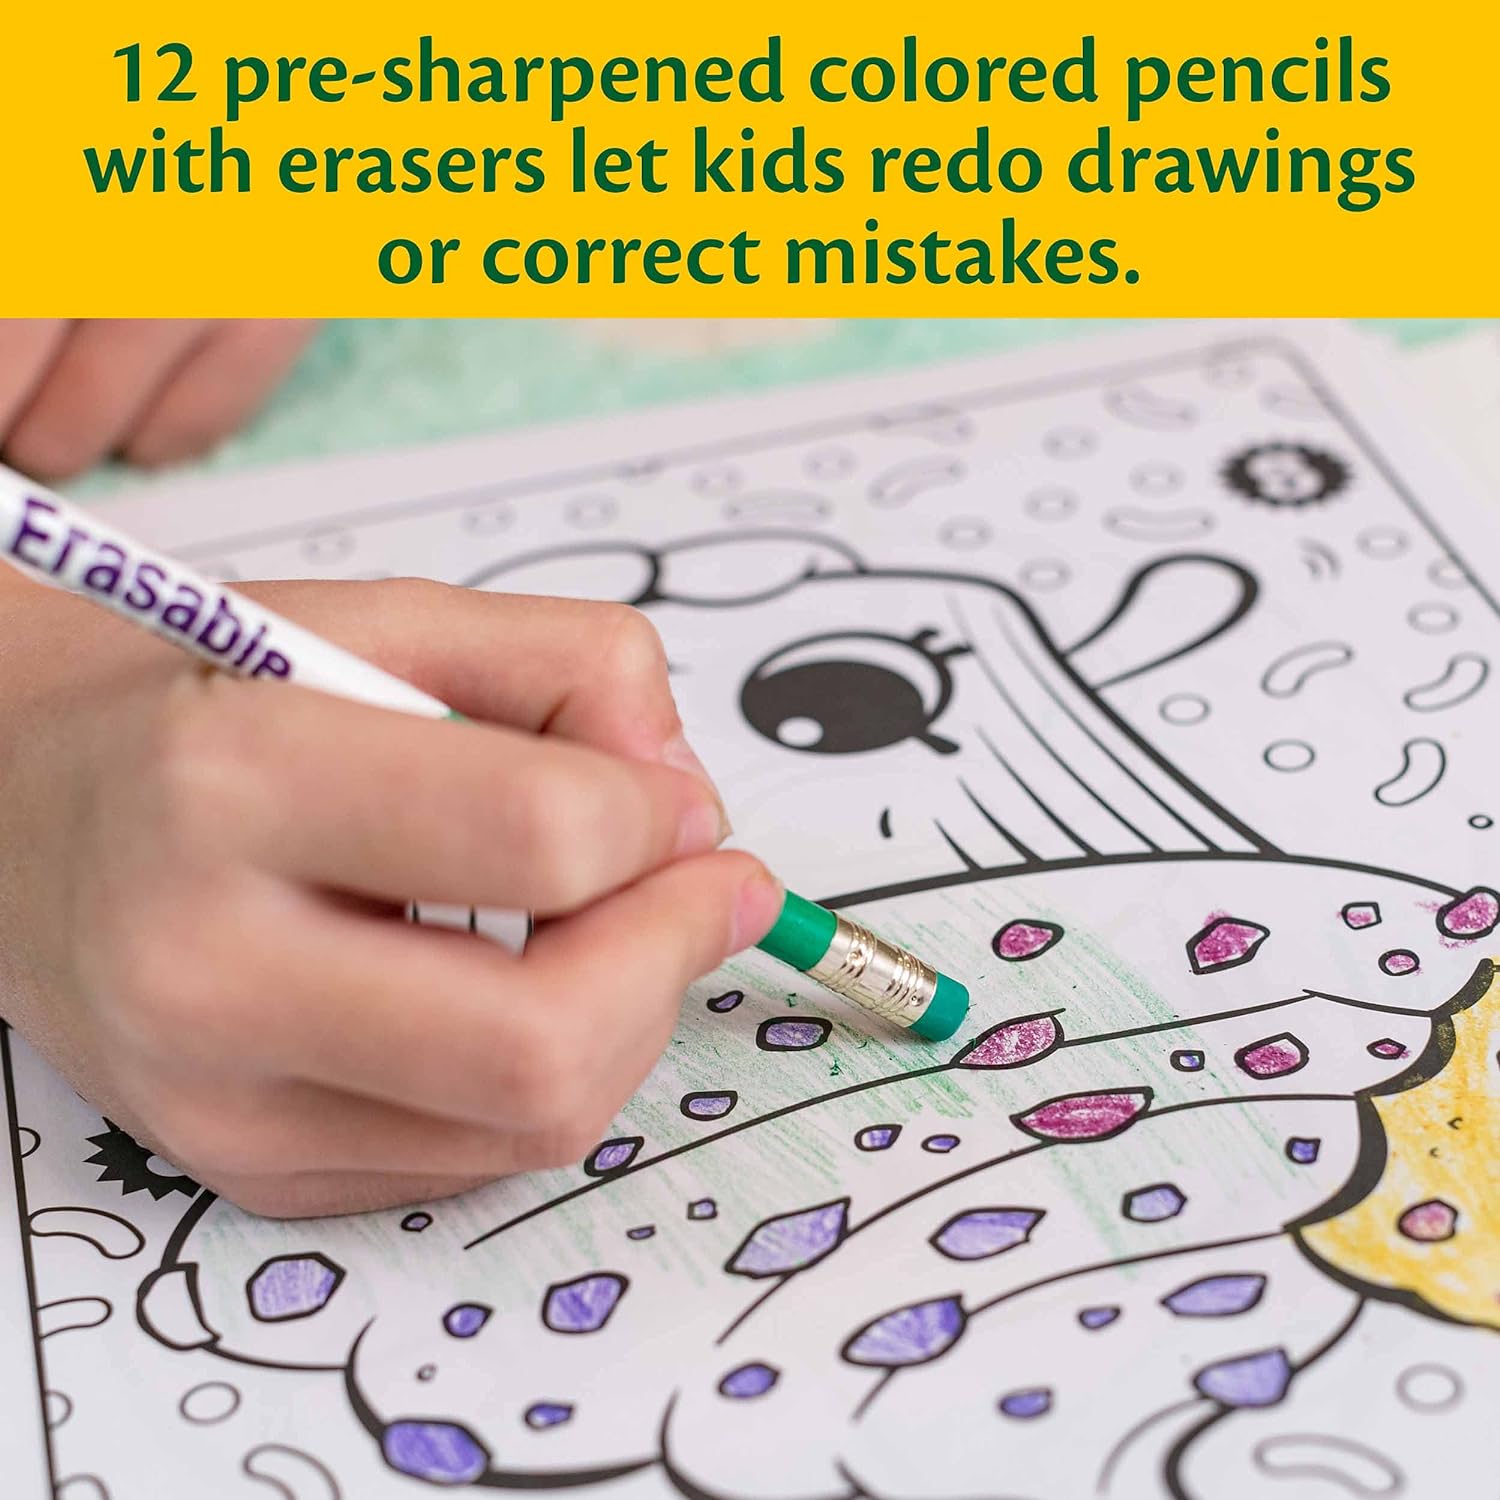 Crayola Erasable Colored Pencils Pack of 12 684412